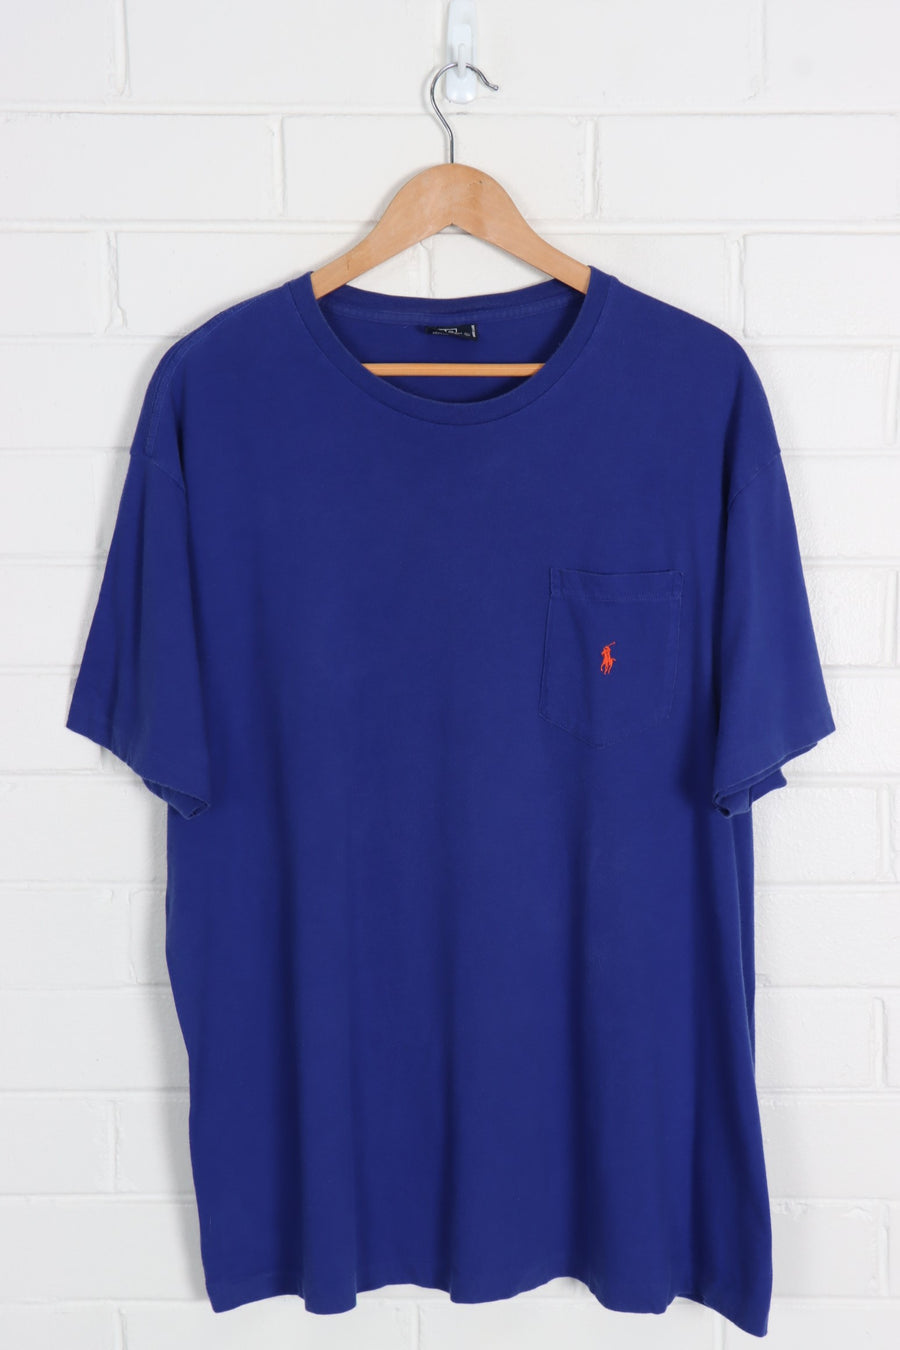 POLO RALPH LAUREN Royal Blue & Orange Embroidered Pocket T-Shirt (XL)